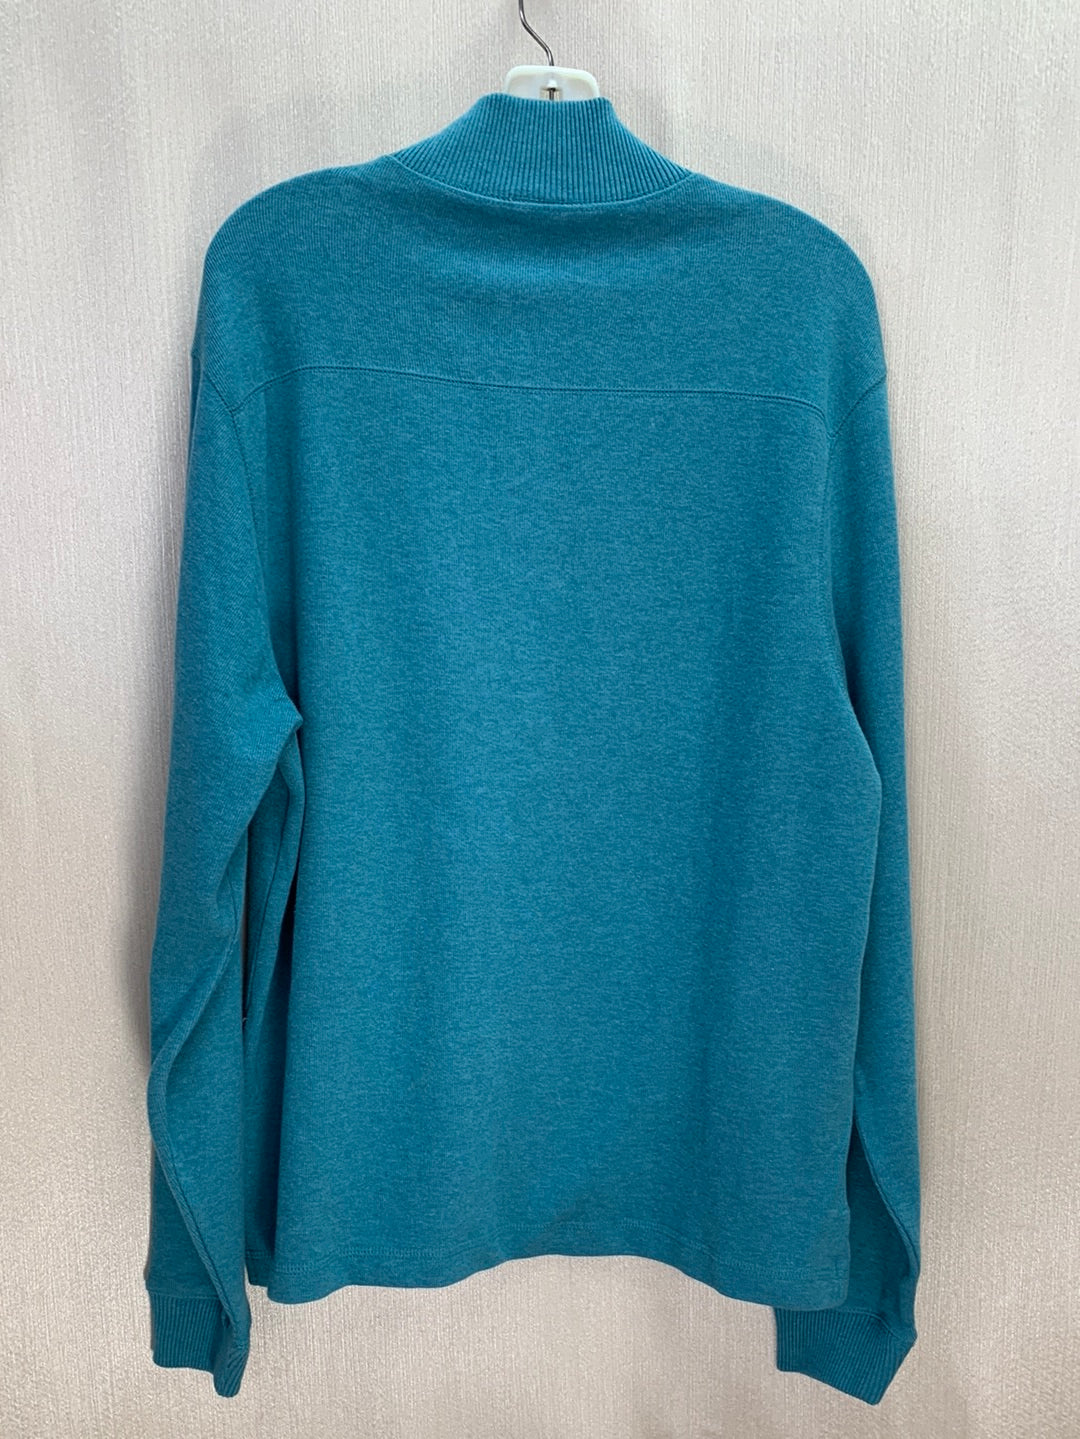 NWT - JOS A BANK aqua blue 100% Cotton 1/4 Zip Sweater - M